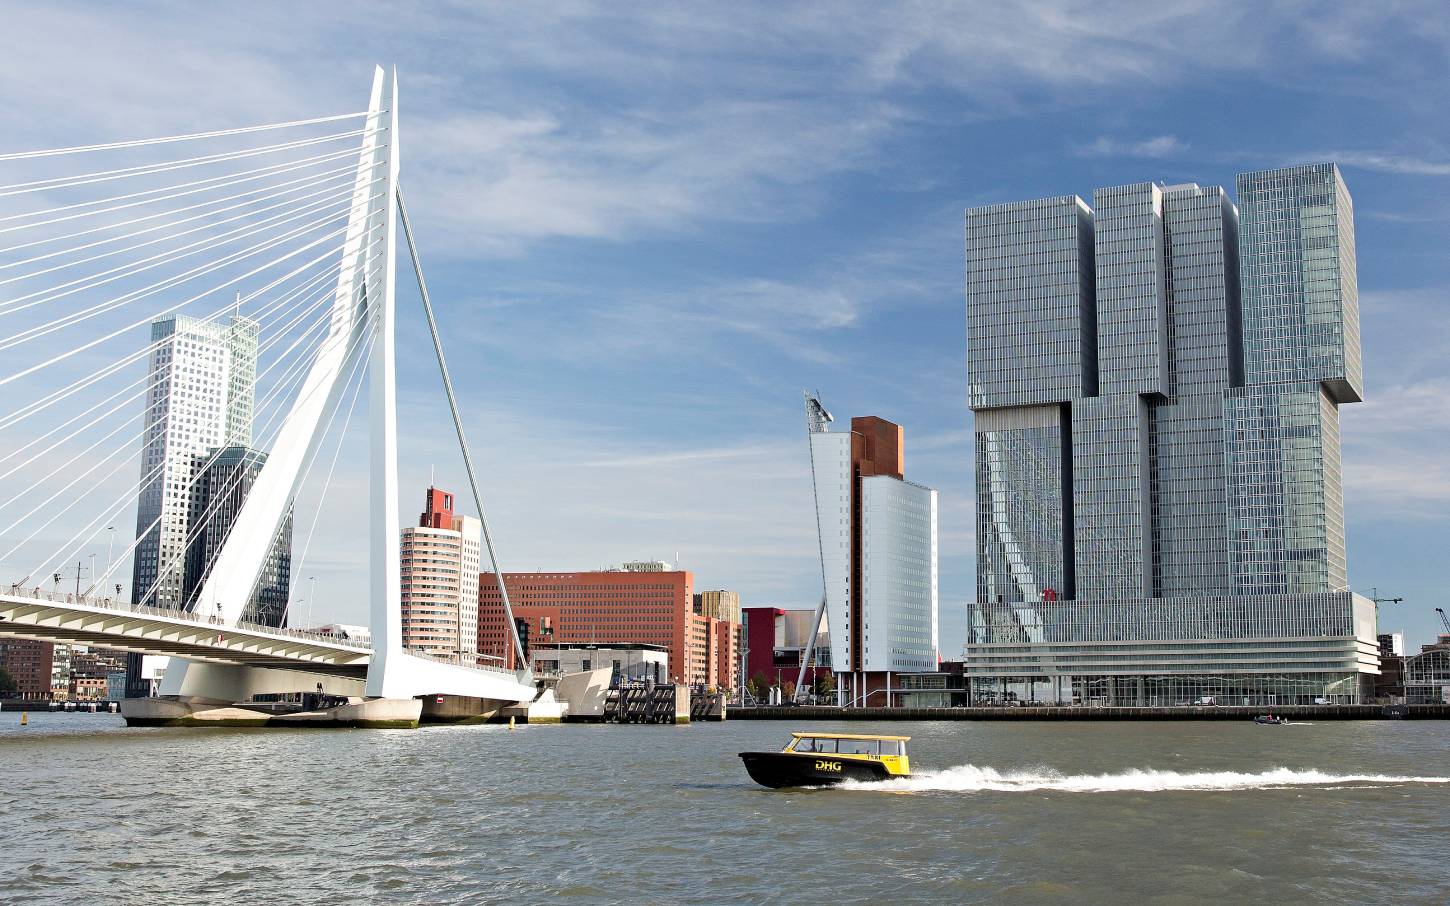 Skyline of Rotterdam with buildings and the Erasmus bridge. 